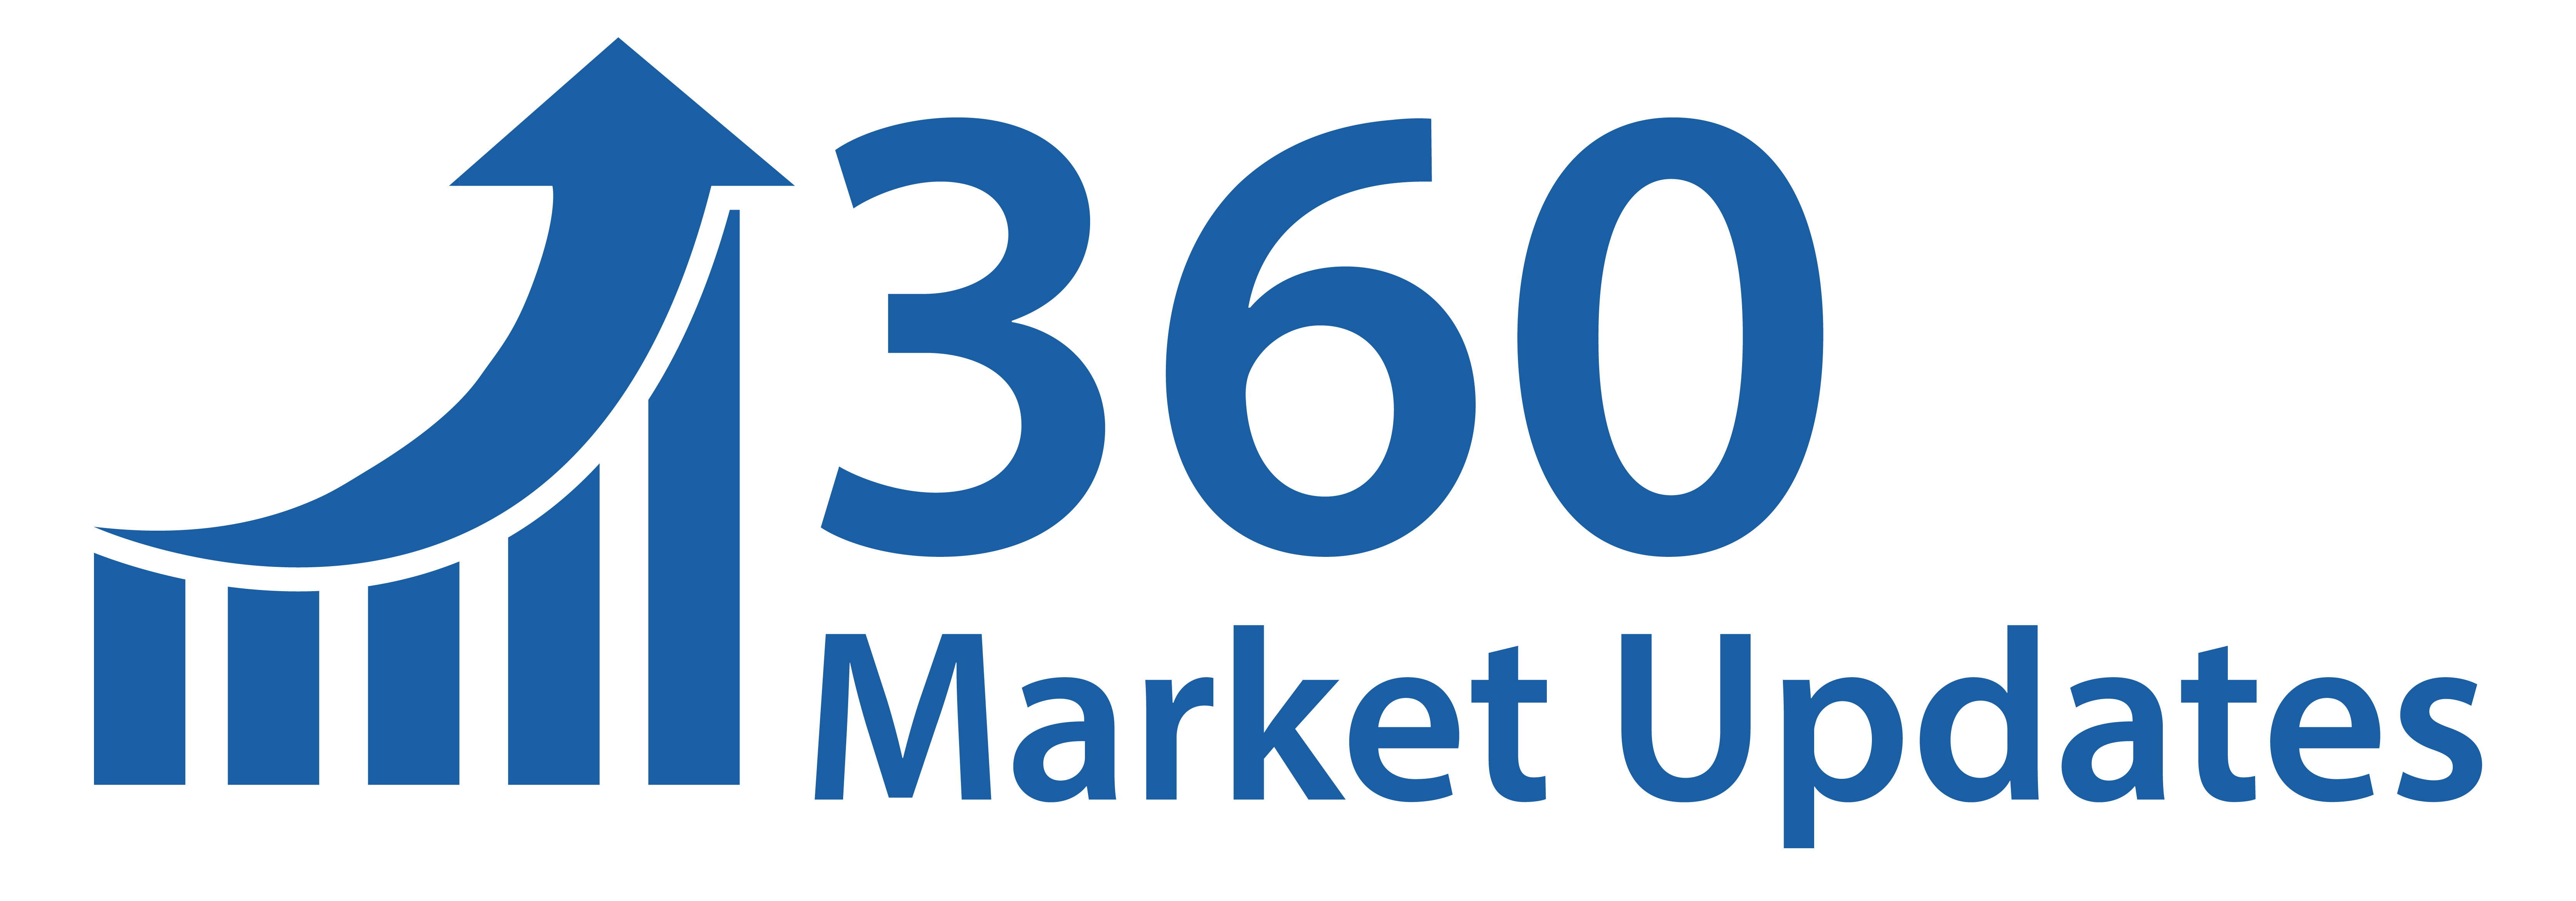 Human Hepatitis B Immunoglobulin Market 2019 Global Industry Share, Size, Revenue, Latest Trends, Business Boosting Strategies, CAGR Status, Growth Opportunities and Forecast 2025 - 360 Market Updates | 360 Market Updates